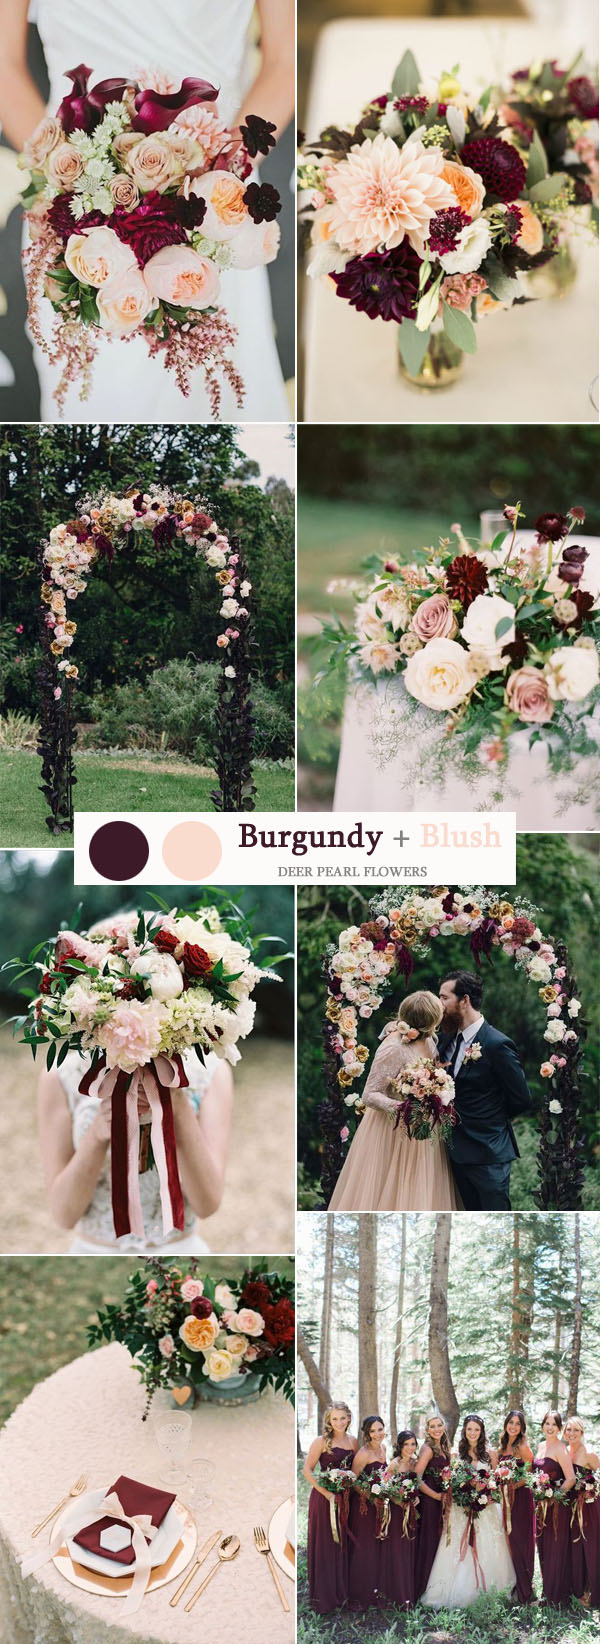 burgundy and blush fall autumn wedding colors ideas